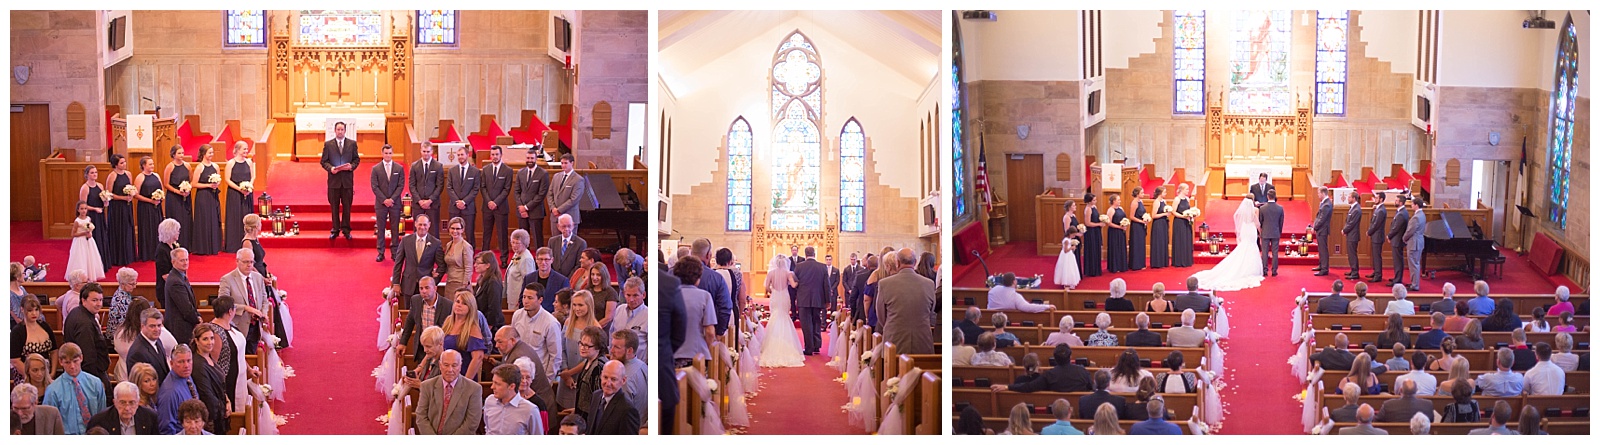 Findlay, Ohio Wedding | Mr. and Mrs. Distel | Monica Brown Photography monicabrownphoto.com